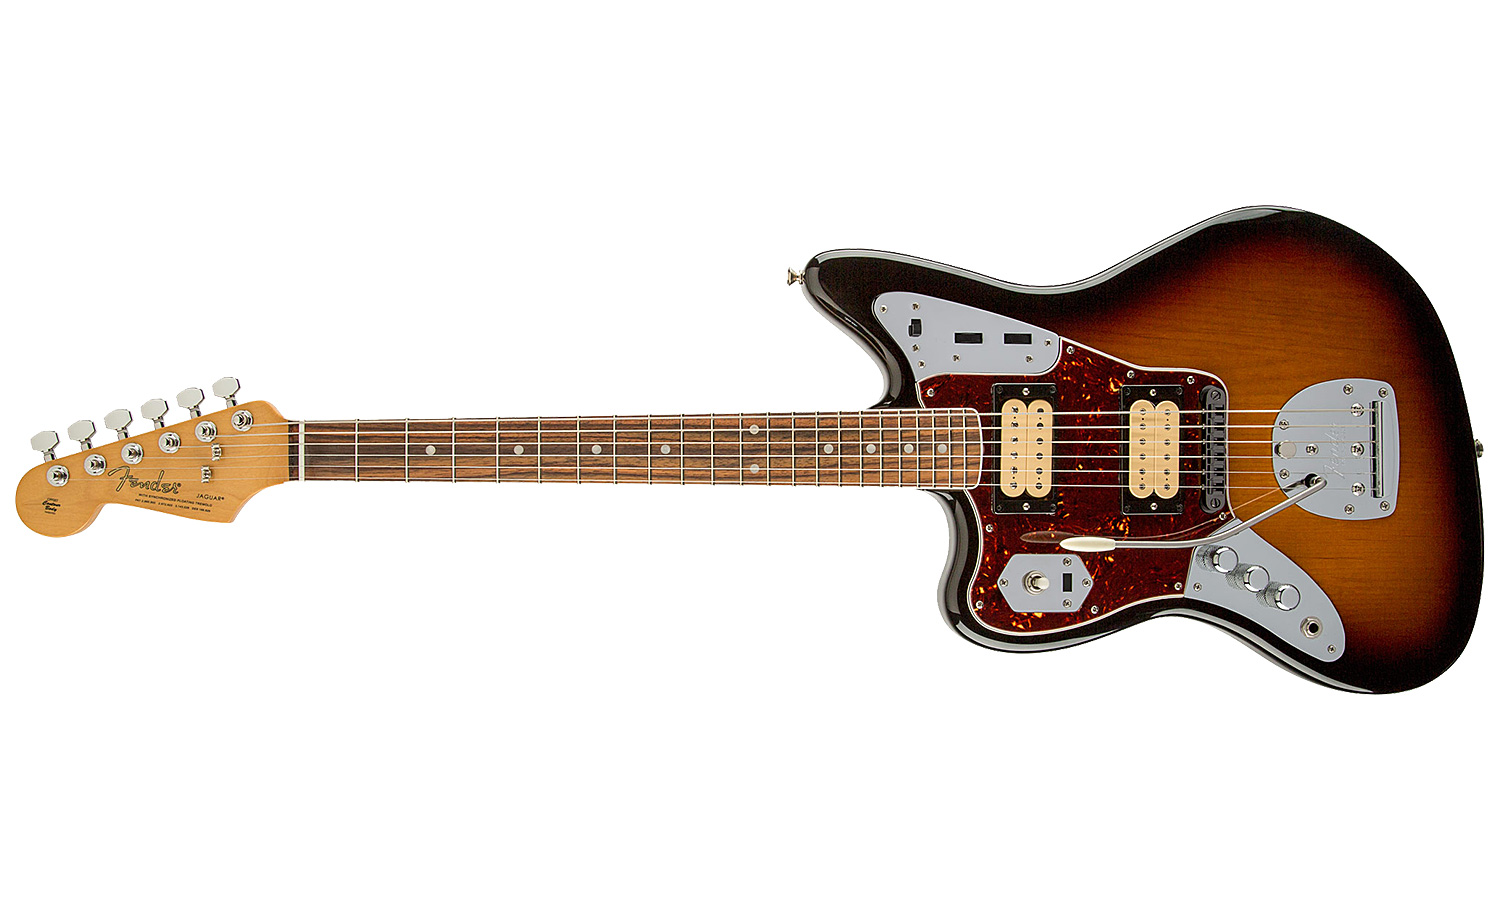 Fender Kurt Cobain Jaguar Lh Gaucher Mex Hh Trem Rw - 3-color Sunburst - Left-handed electric guitar - Variation 2